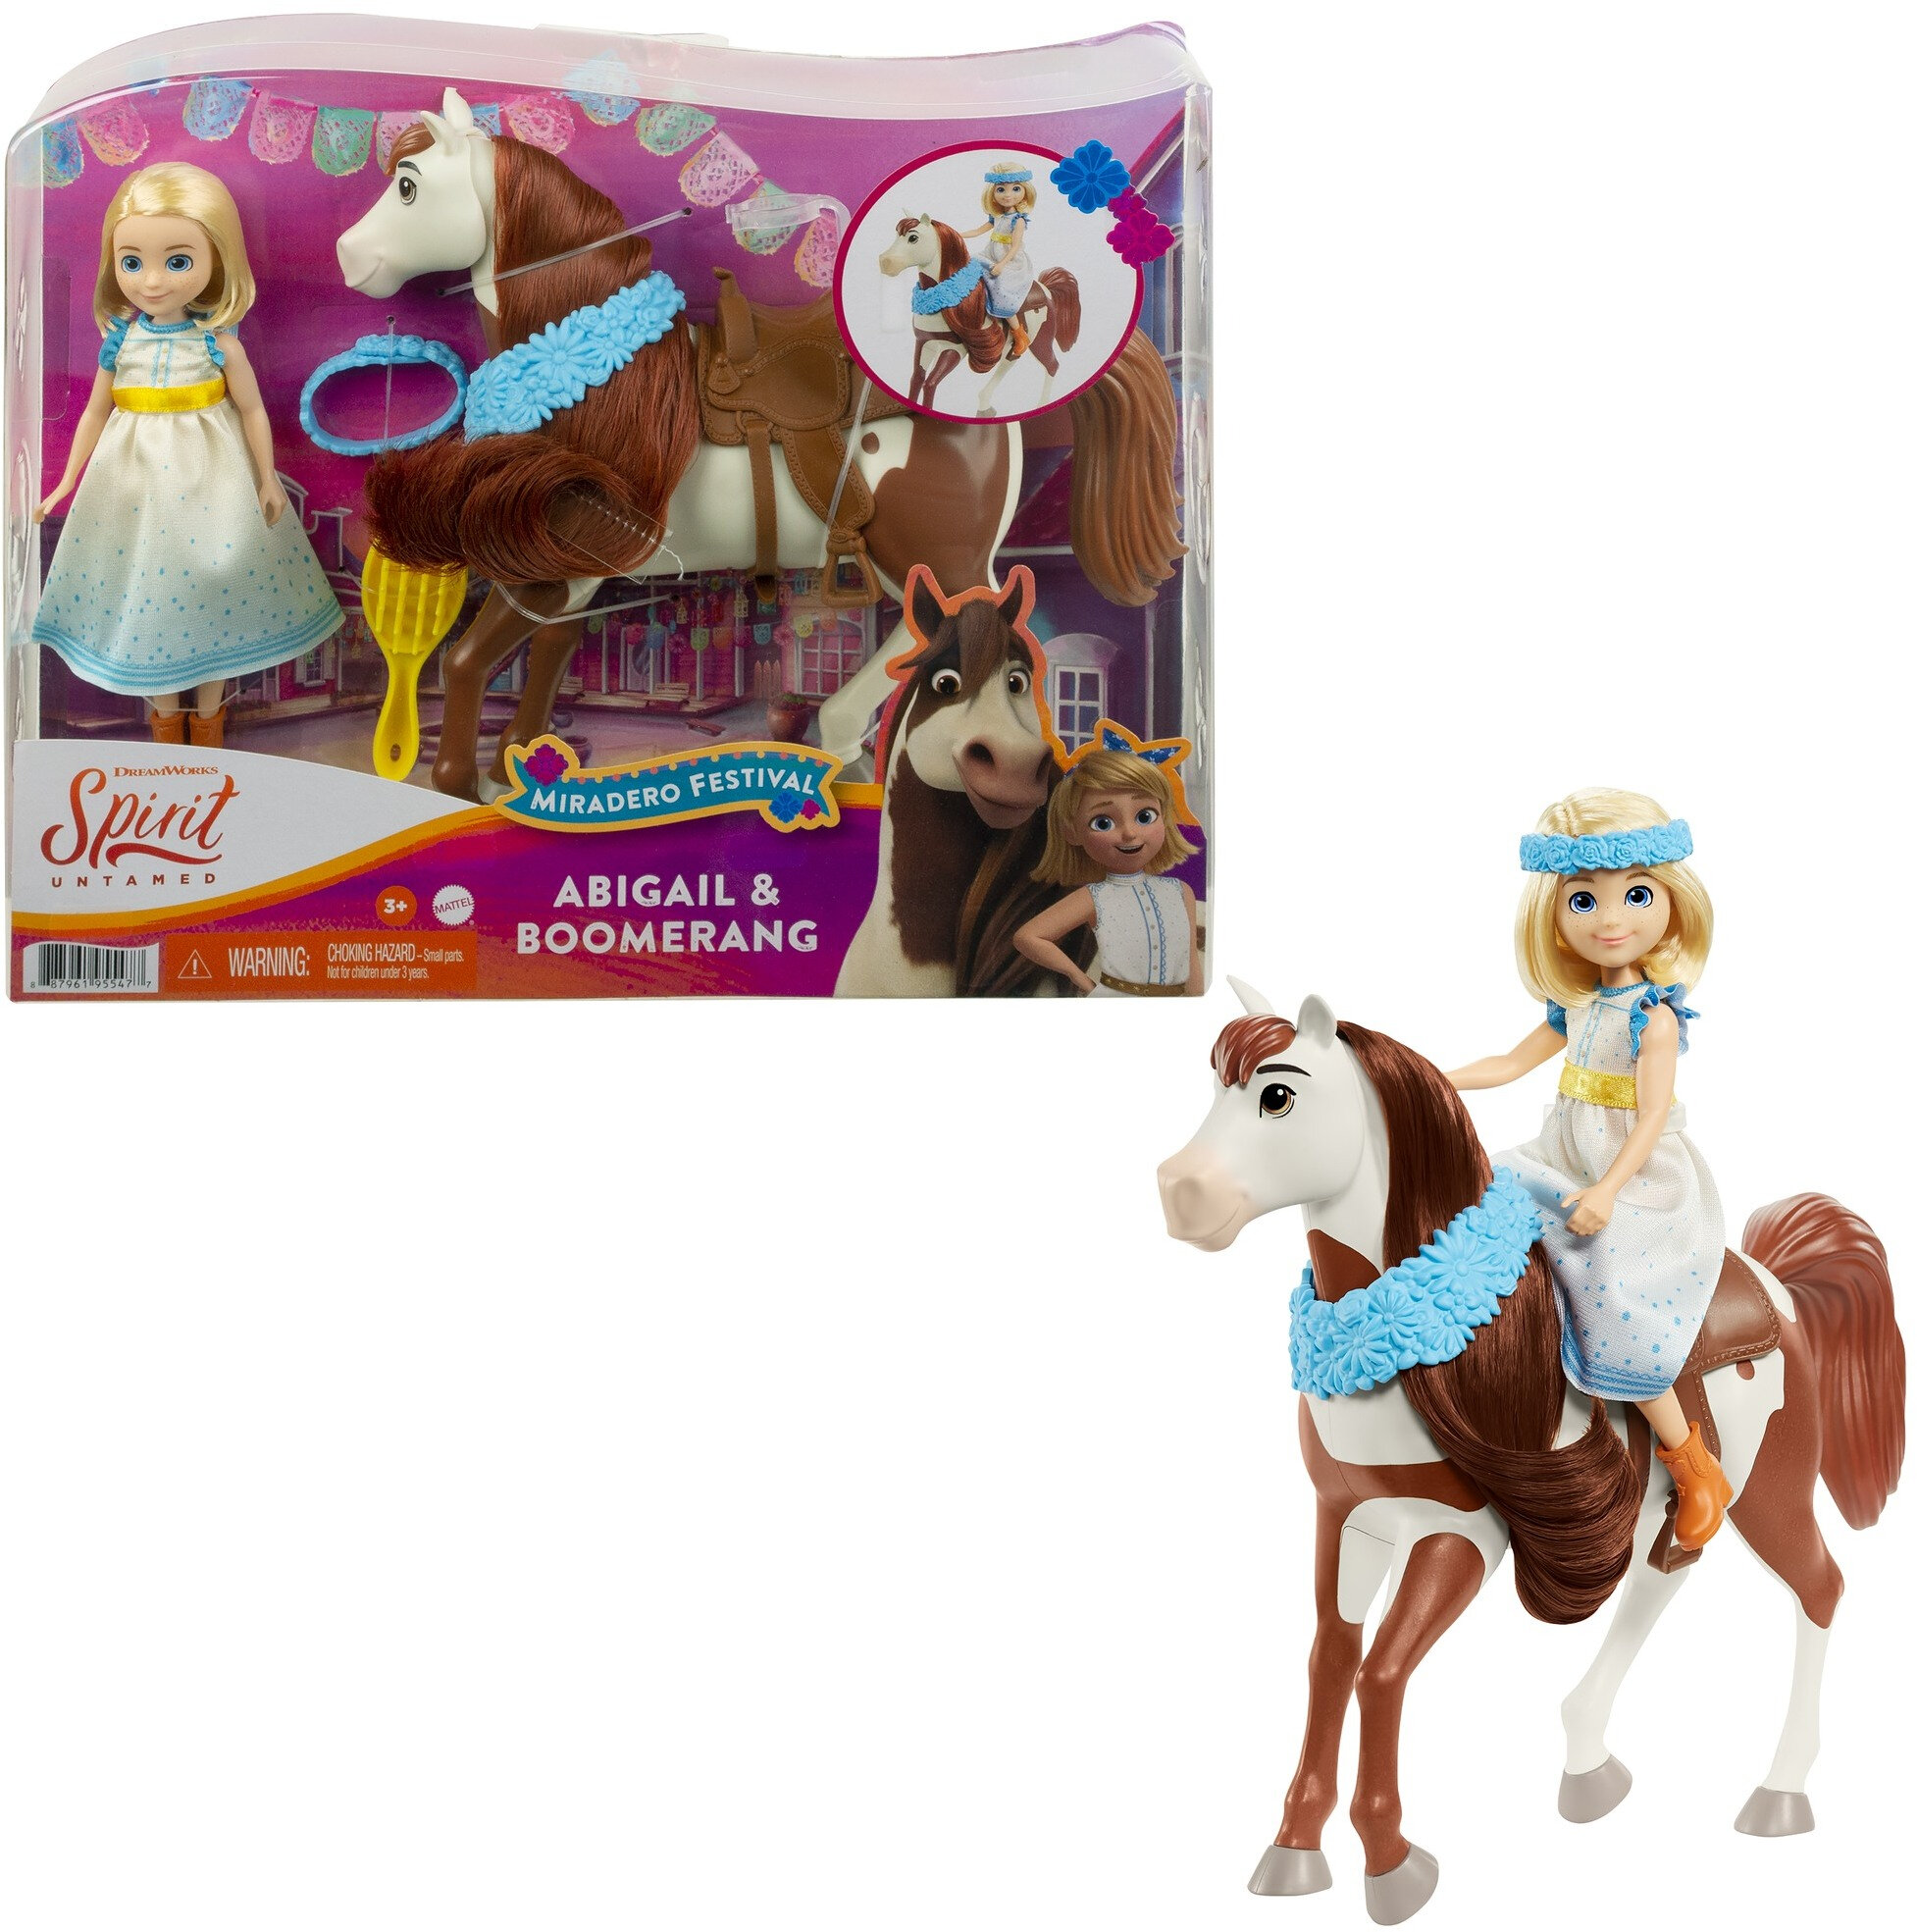 Spirit Untamed Miradero Festival Abigail Doll (7-in/17.78-cm) & Boomerang Horse (8-in/20.32-cm) - image 1 of 6